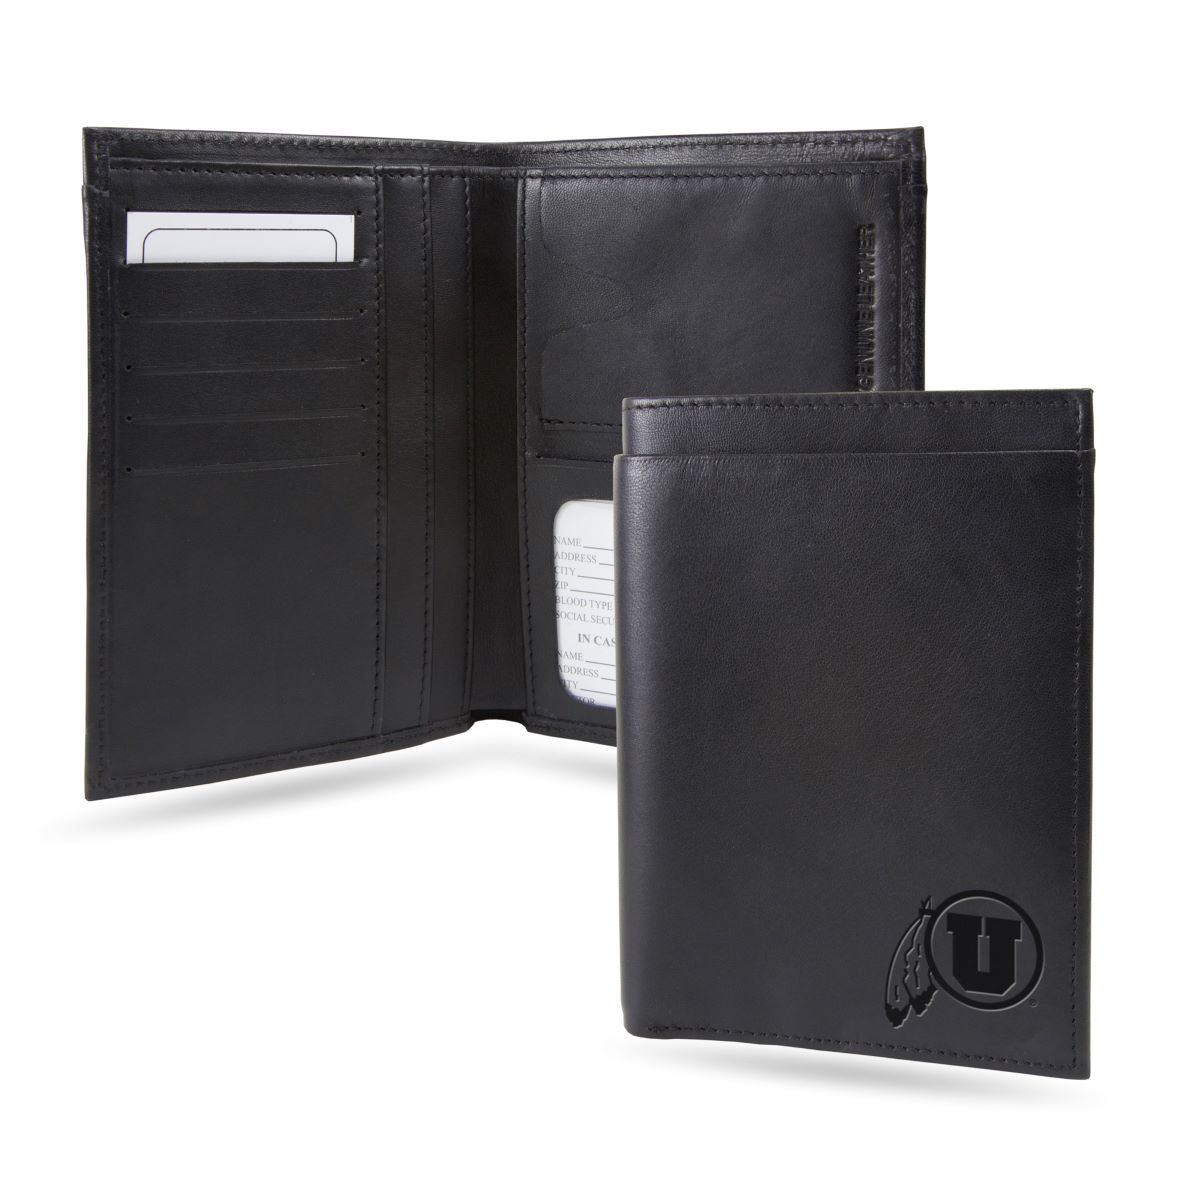 Utah NCAA Utes Black Leather Traveling Bilfold Wallet w/ RFID Blocking- 14 total slots/pockets - image 1 of 6